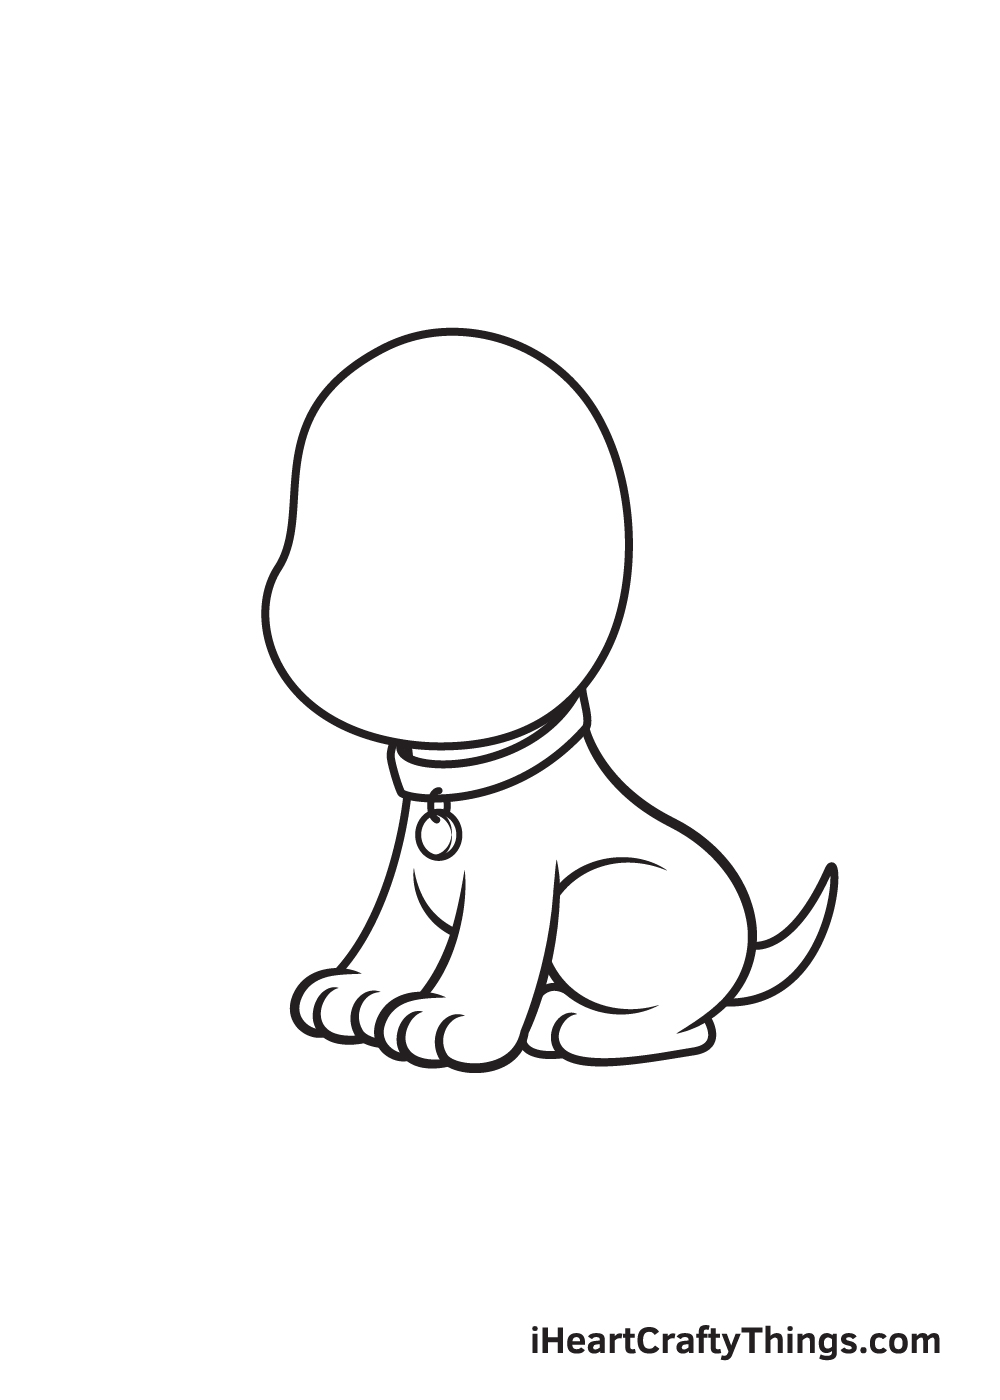 dog drawing - step 6